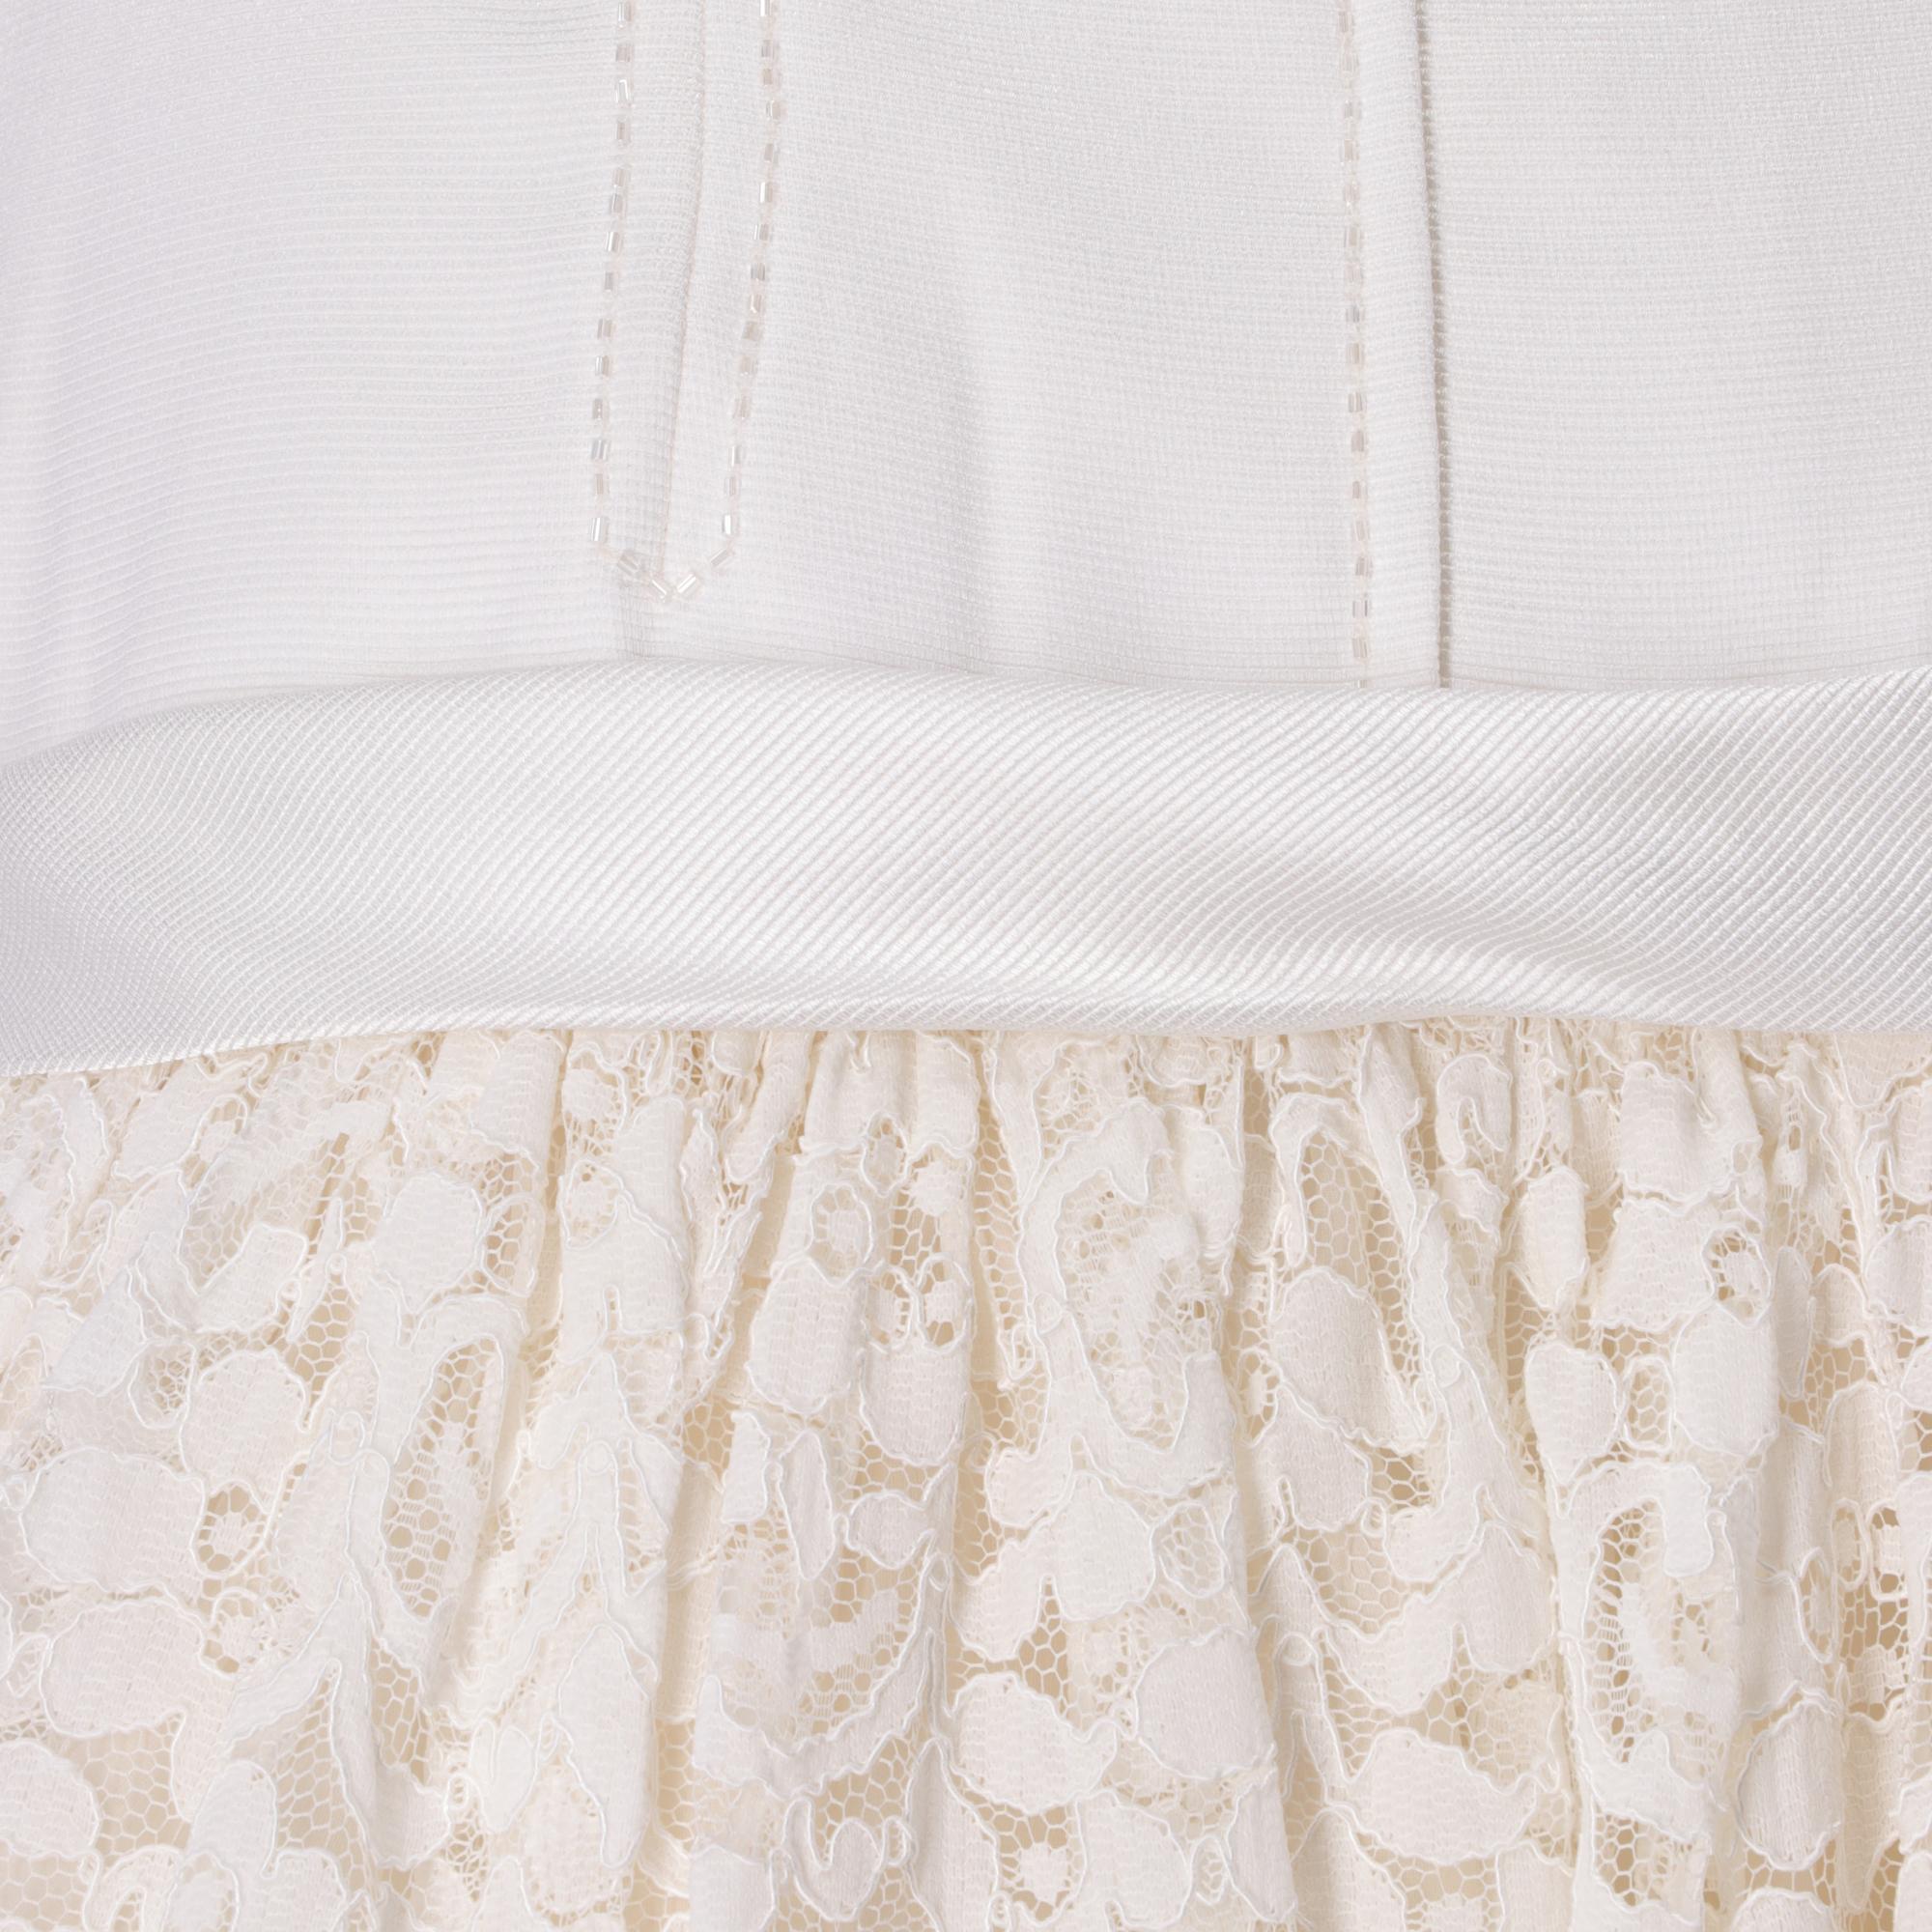 Women's 1980s White Wedding Dress With Bow